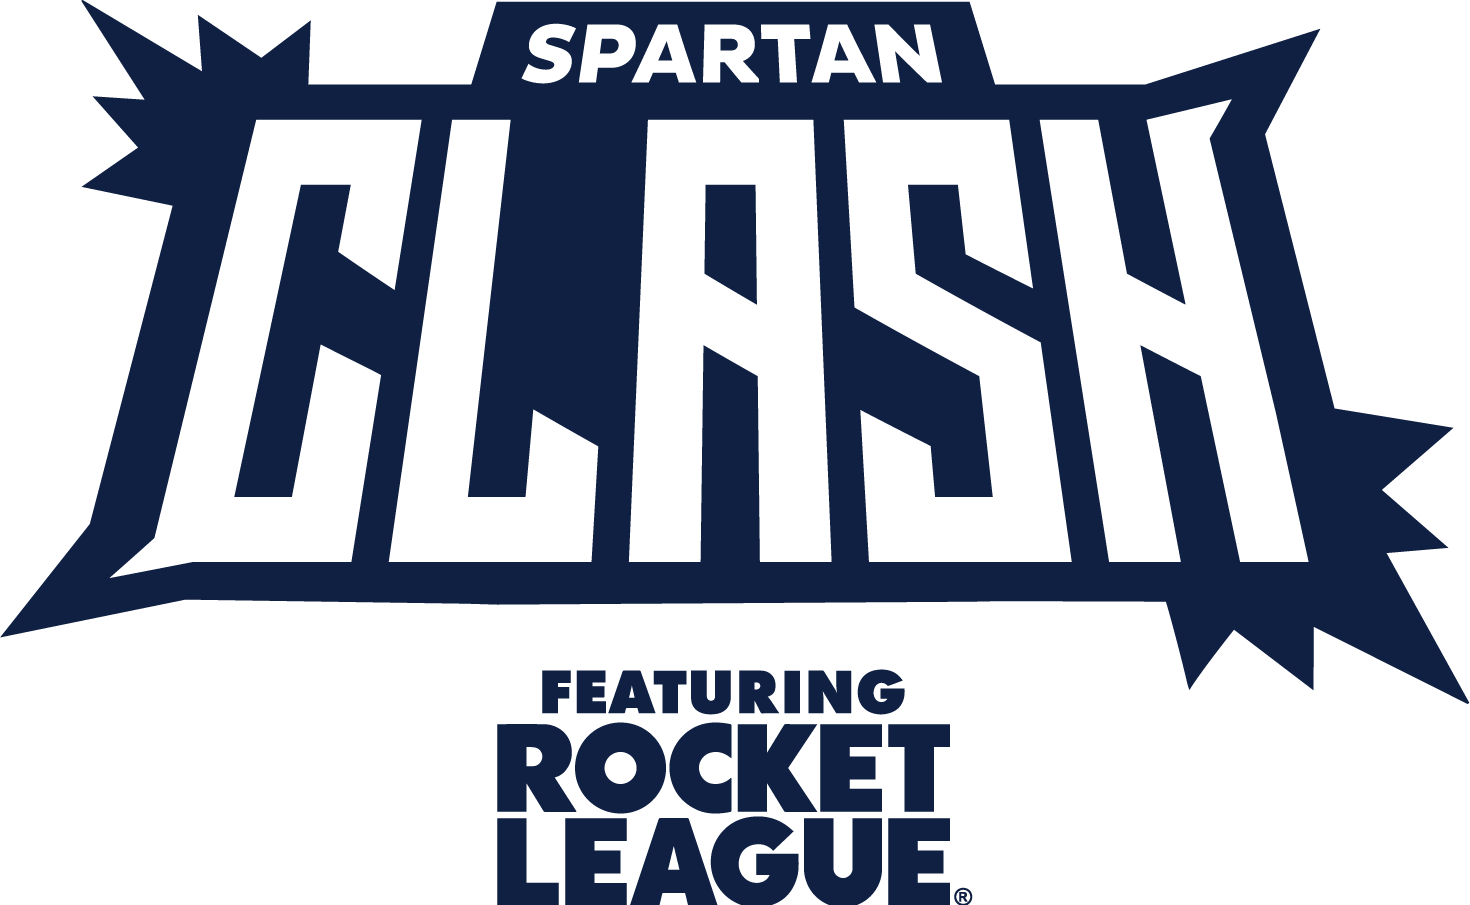 Spartan Clash featuring Rocket League